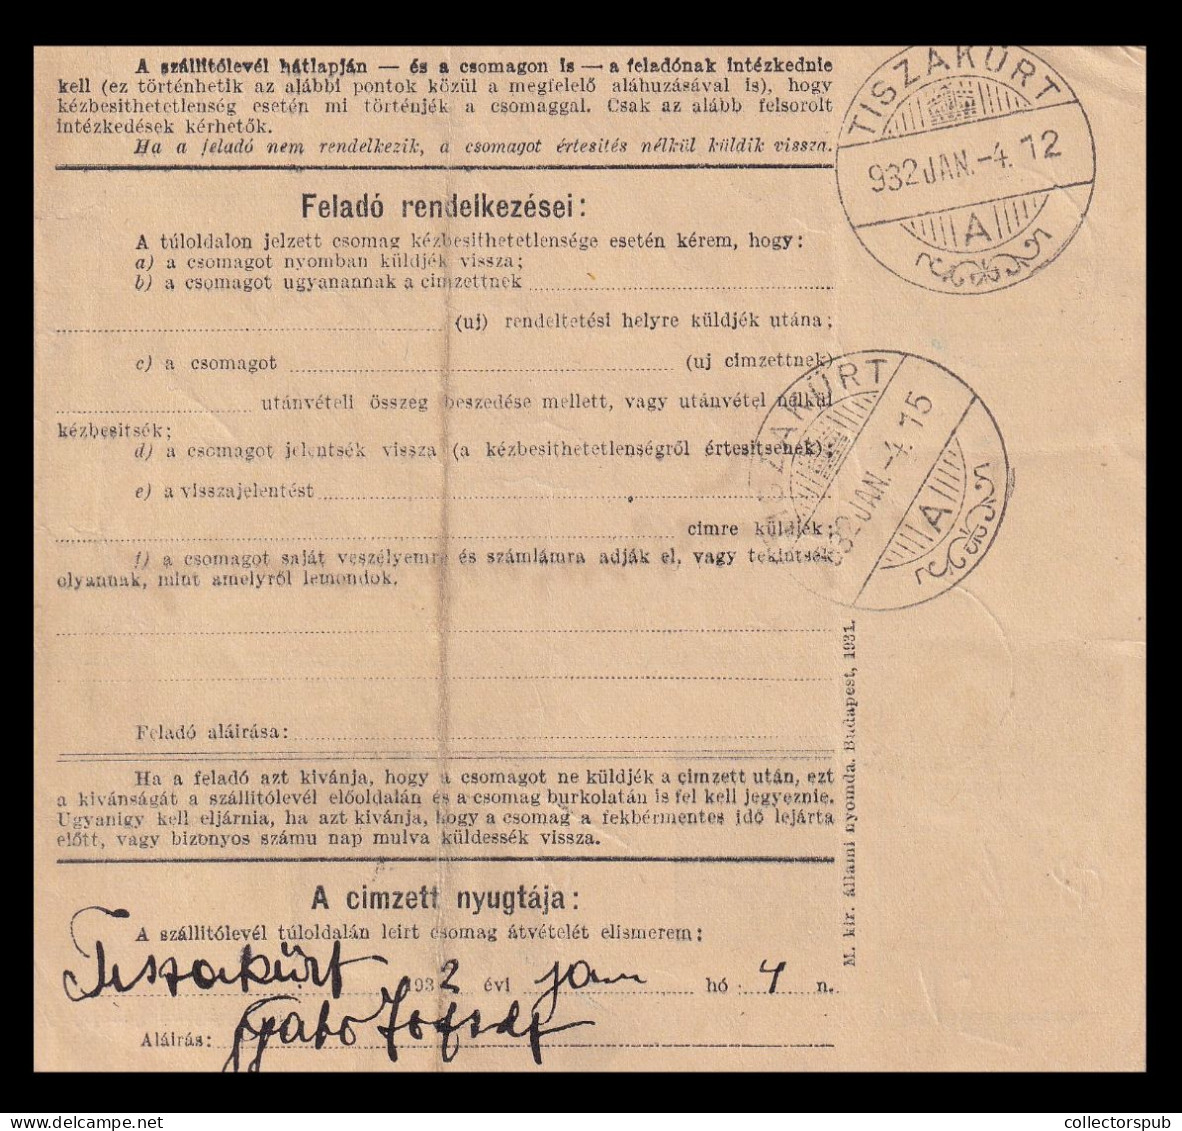 HUNGARY Nice Parcel Post Card  Magyar.Kir.Posta. 25 1932. "terjedelmes" - Colis Postaux